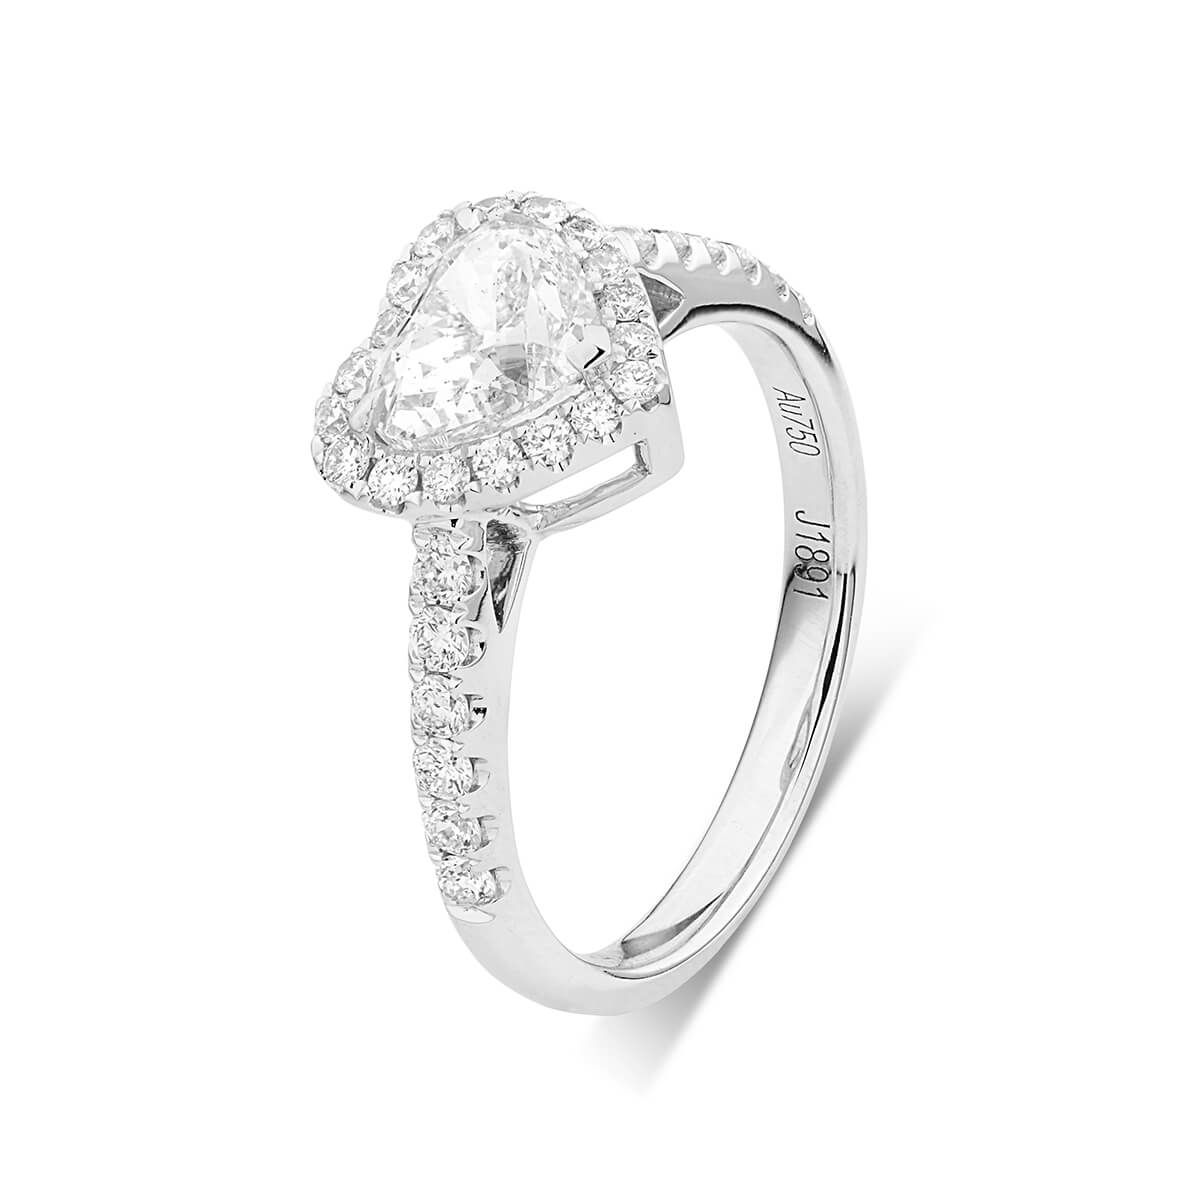  White Diamond Ring, 1.00 Ct. (1.38 Ct. TW), Heart shape, GIA Certified, 1229502004